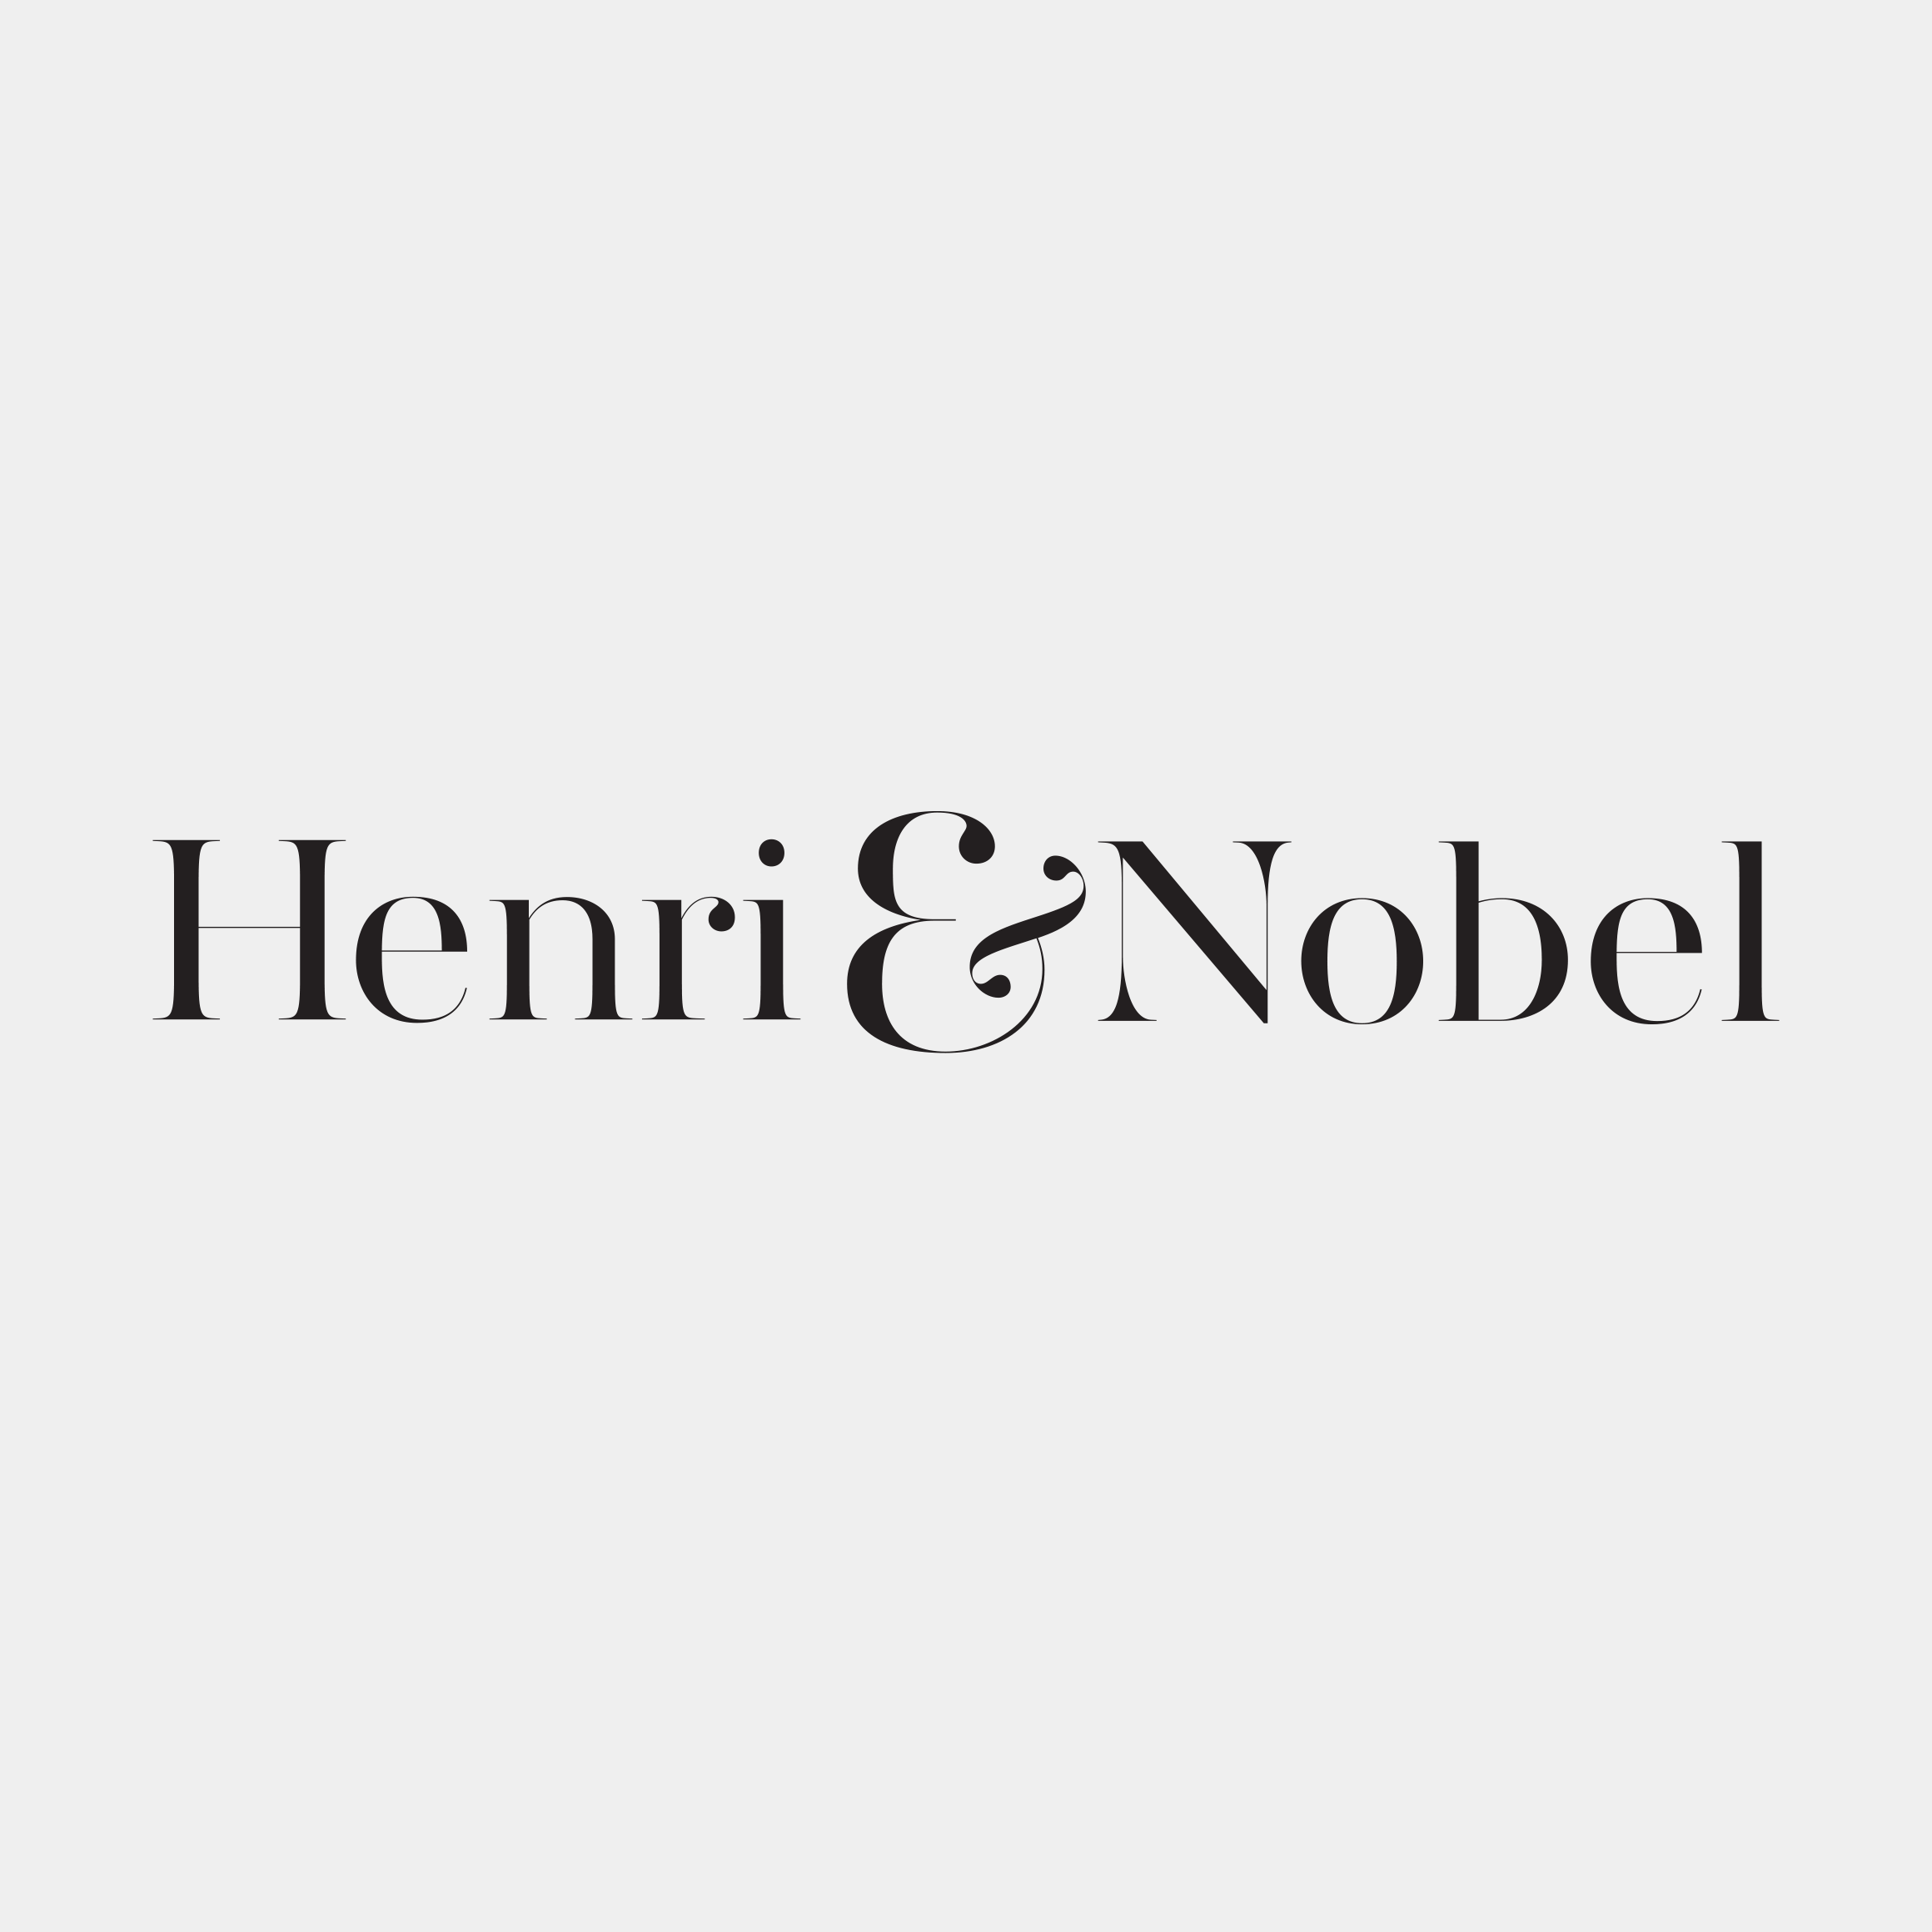 henri and nobel logo